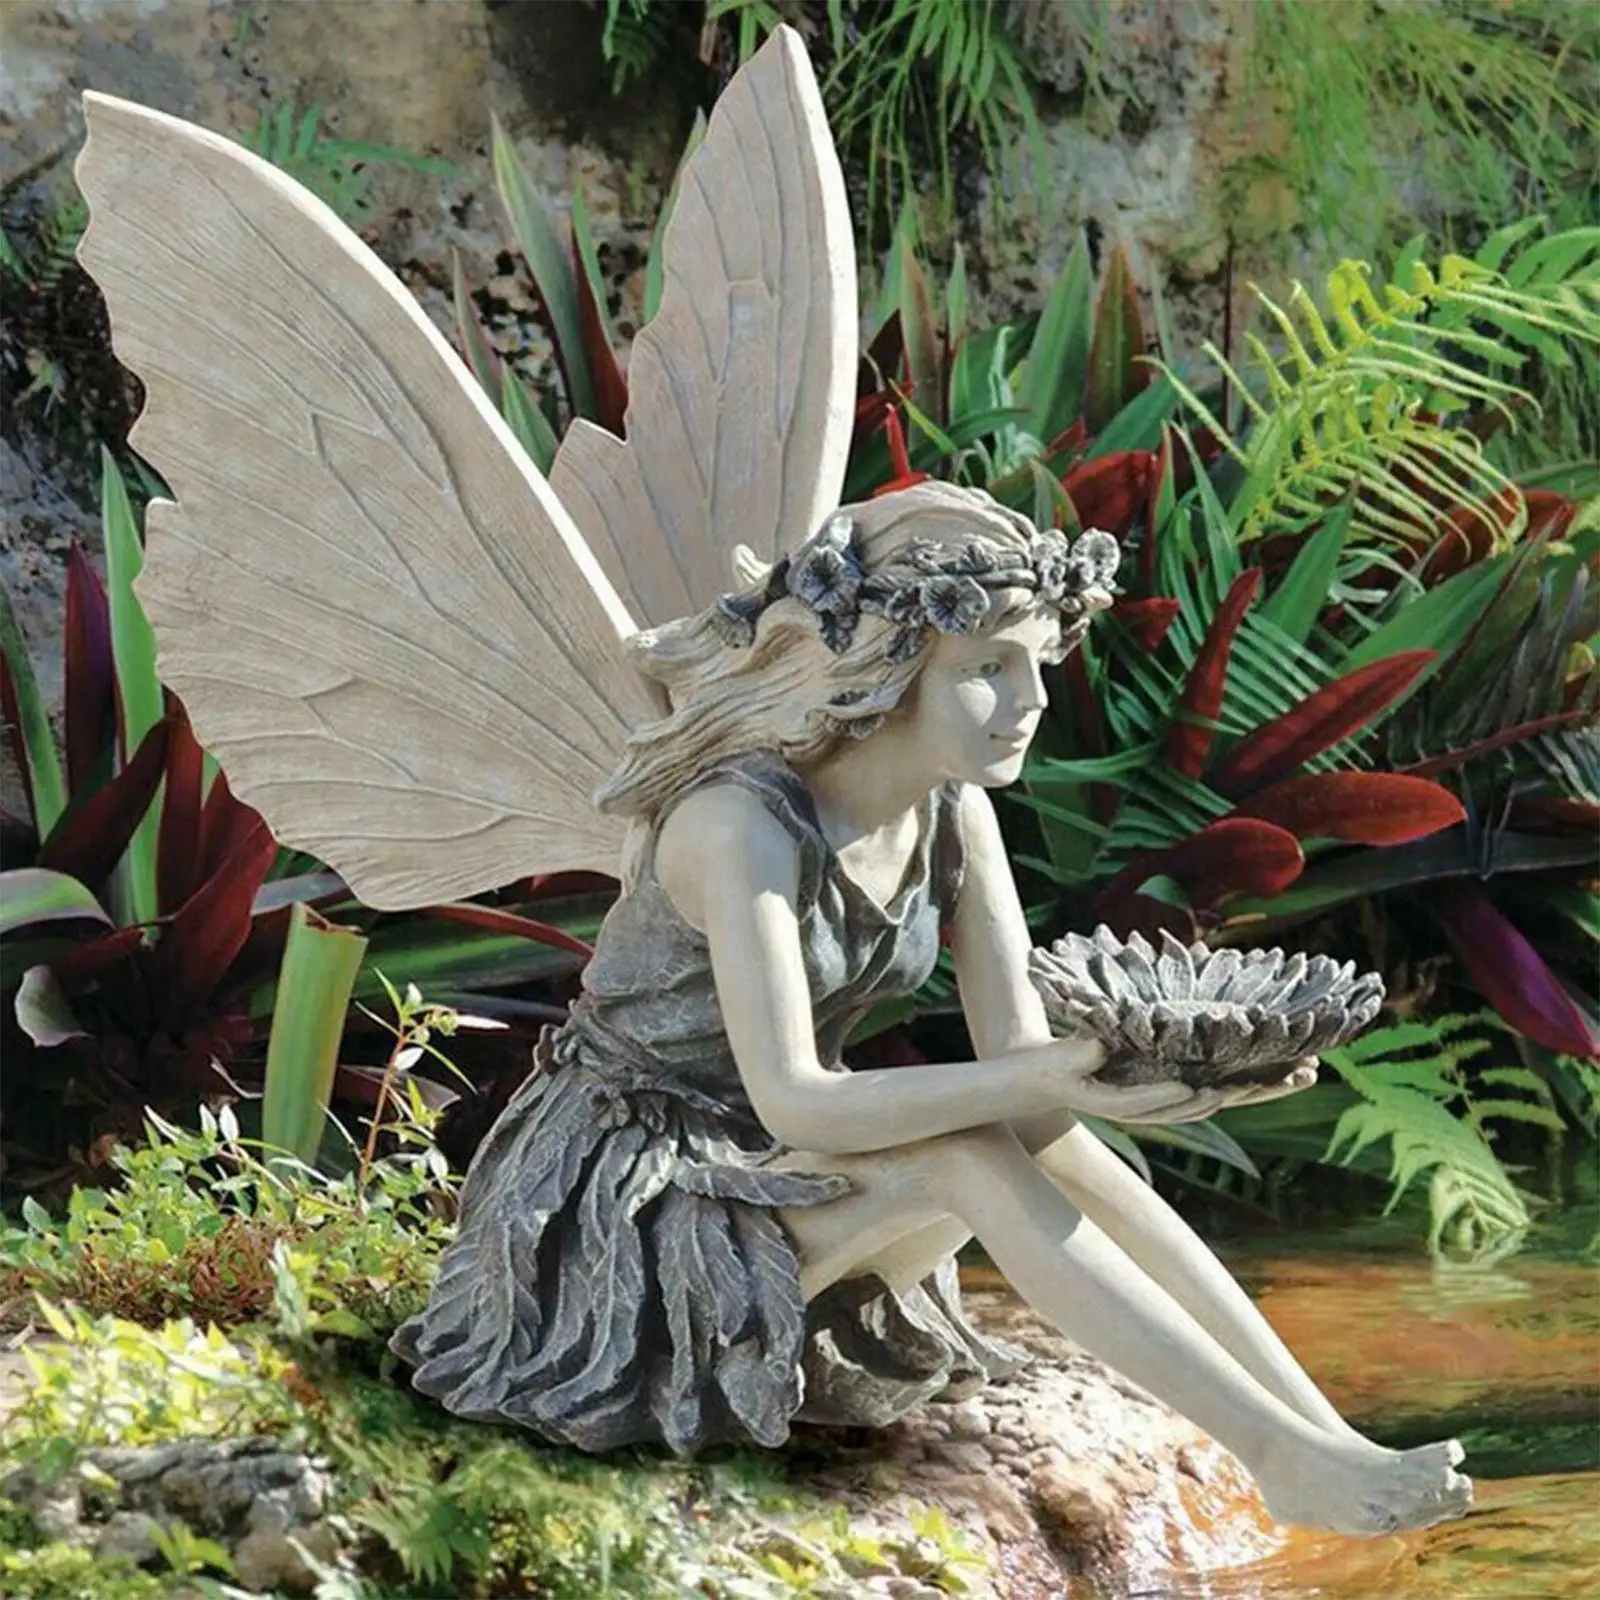 

Wonderland Flower Fairy Statue Garden Decoration Angel Girl Sitting Statue Wing Angel Outdoor Resin Ornament Figurines Deco S4s8